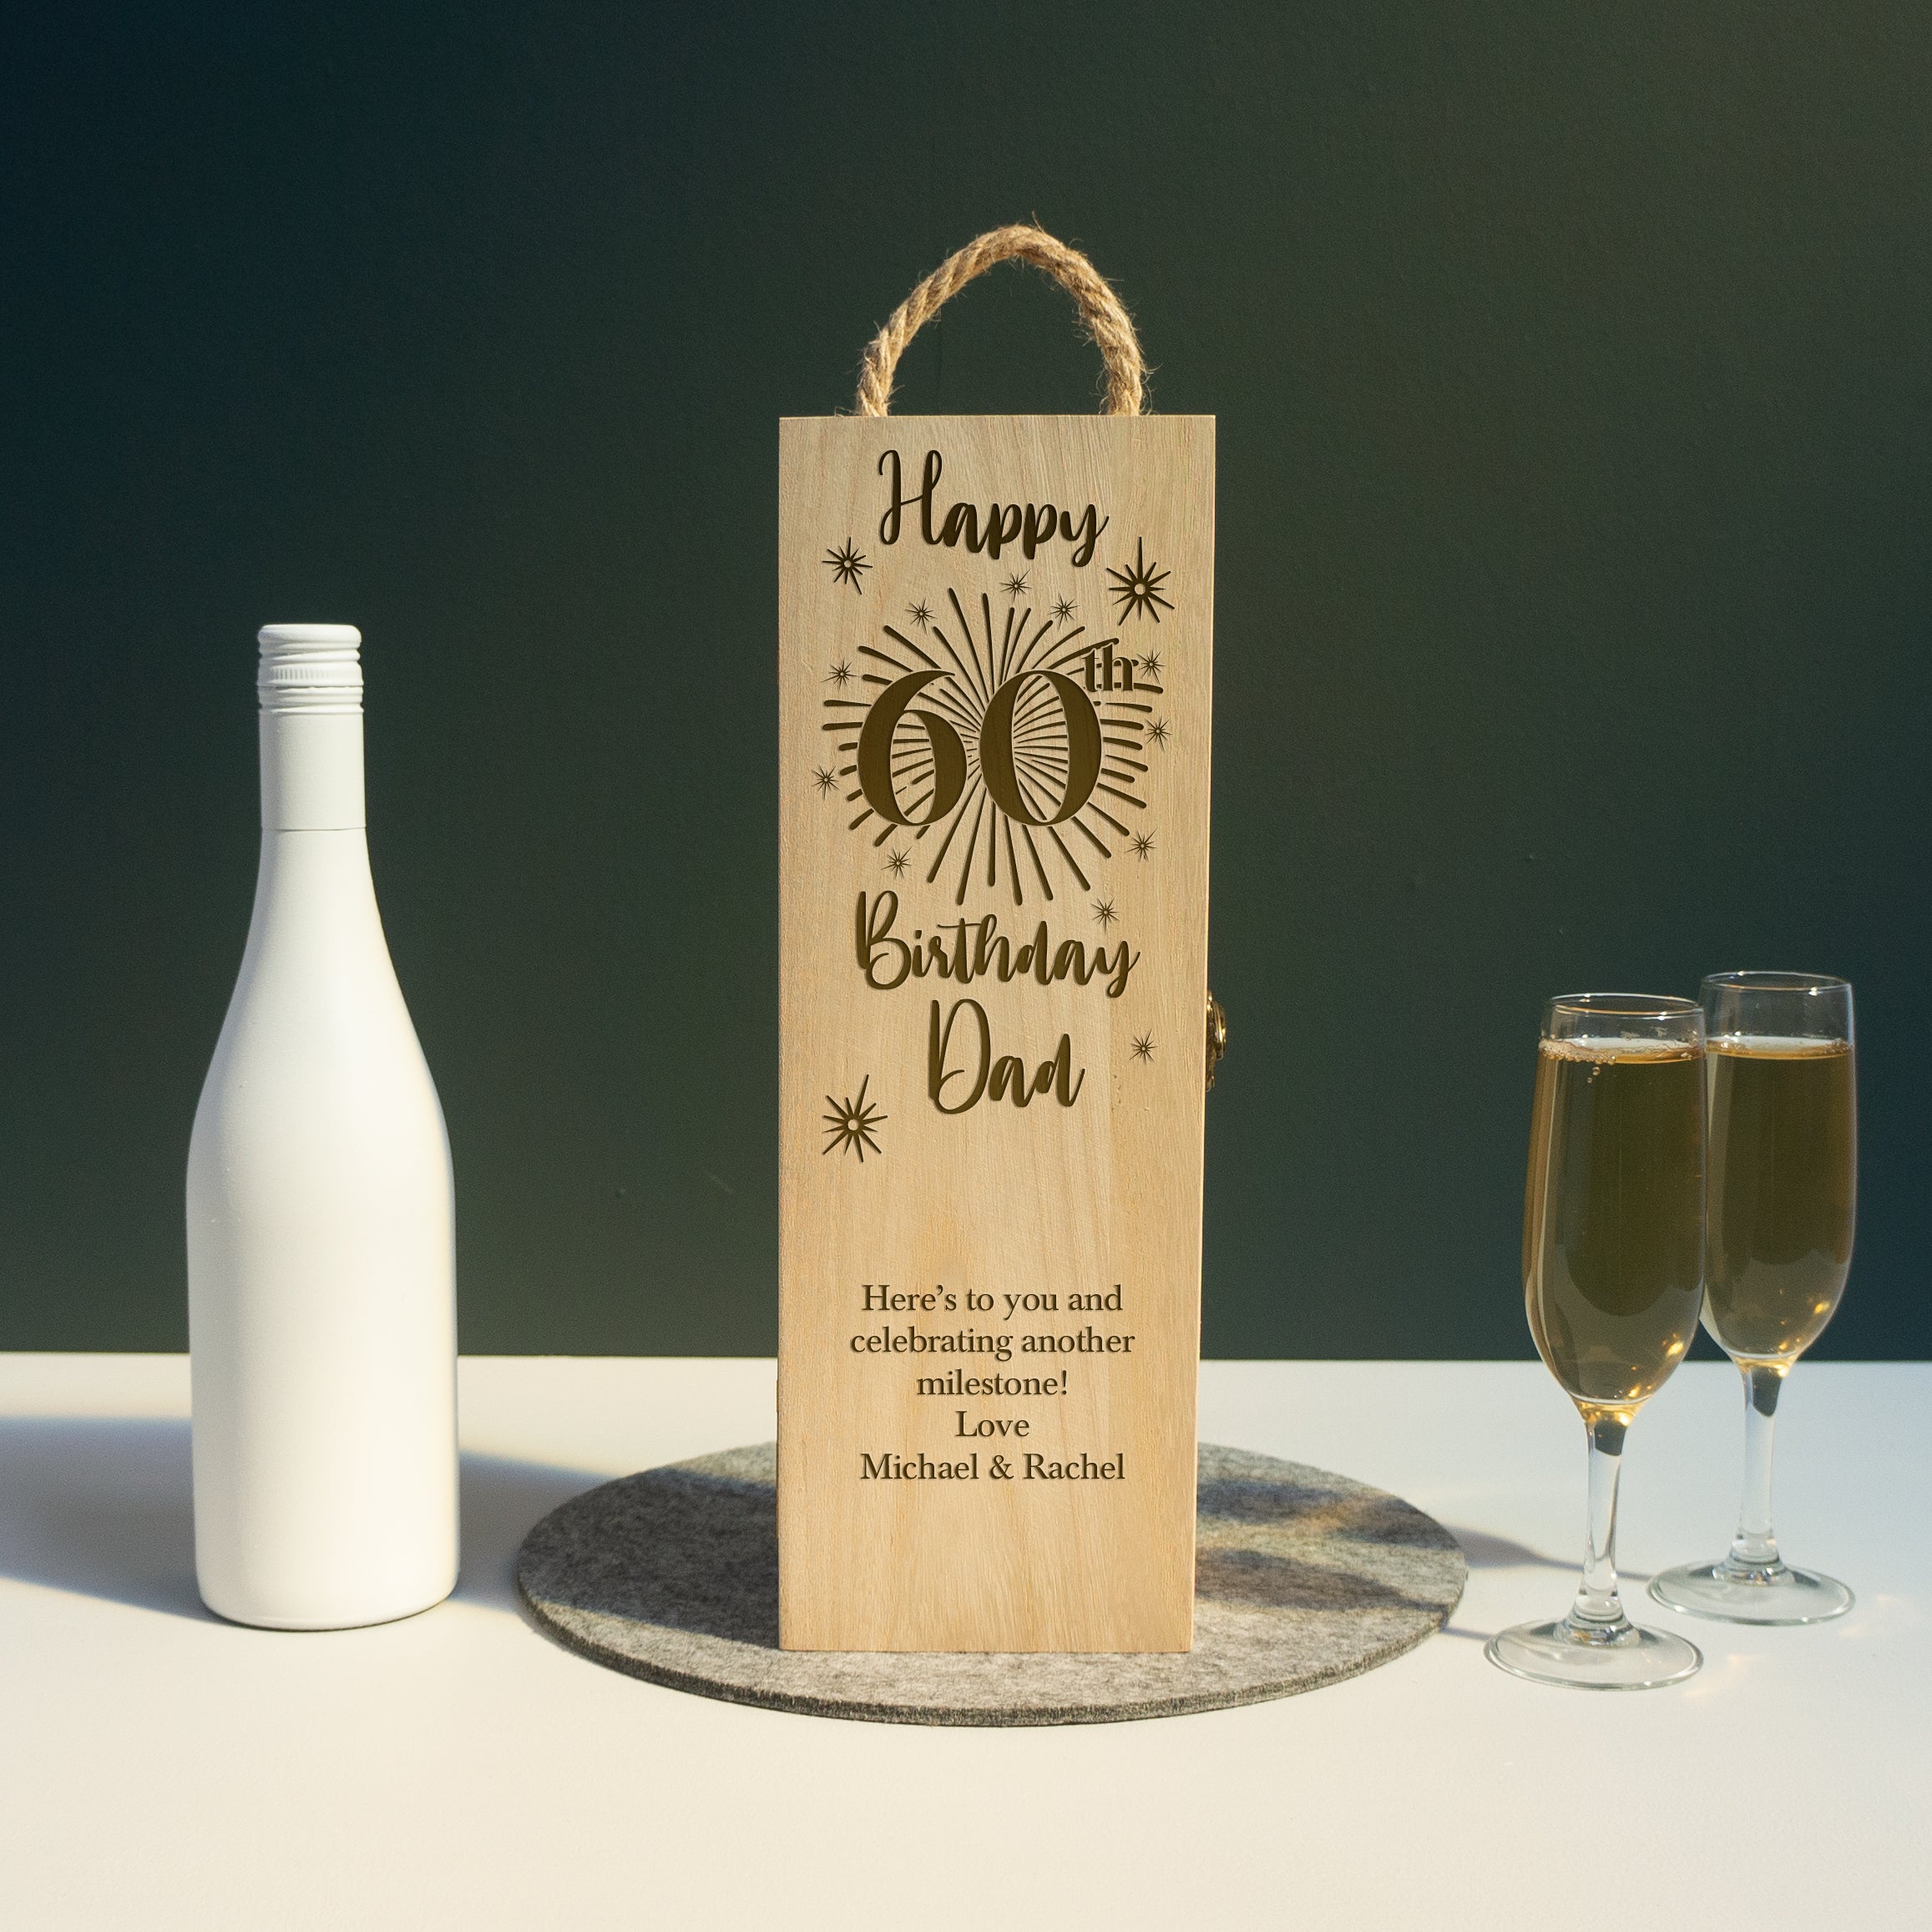 Personalised 60th birthday wooden wine box. Custom engraved gifting box